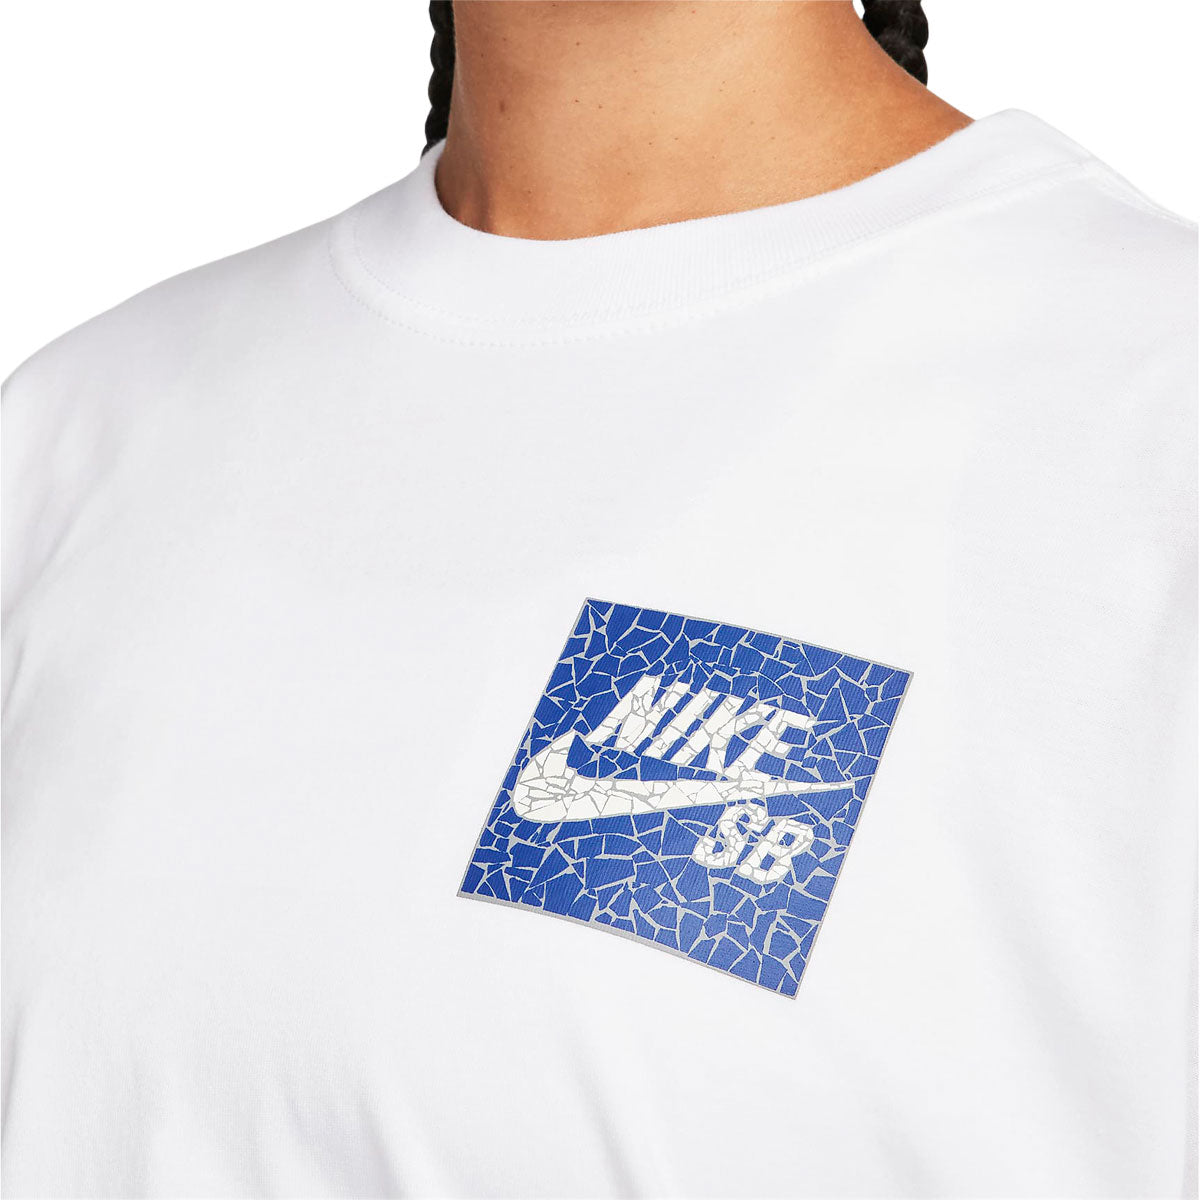 Nike SB Mosaic T-Shirt - White image 5